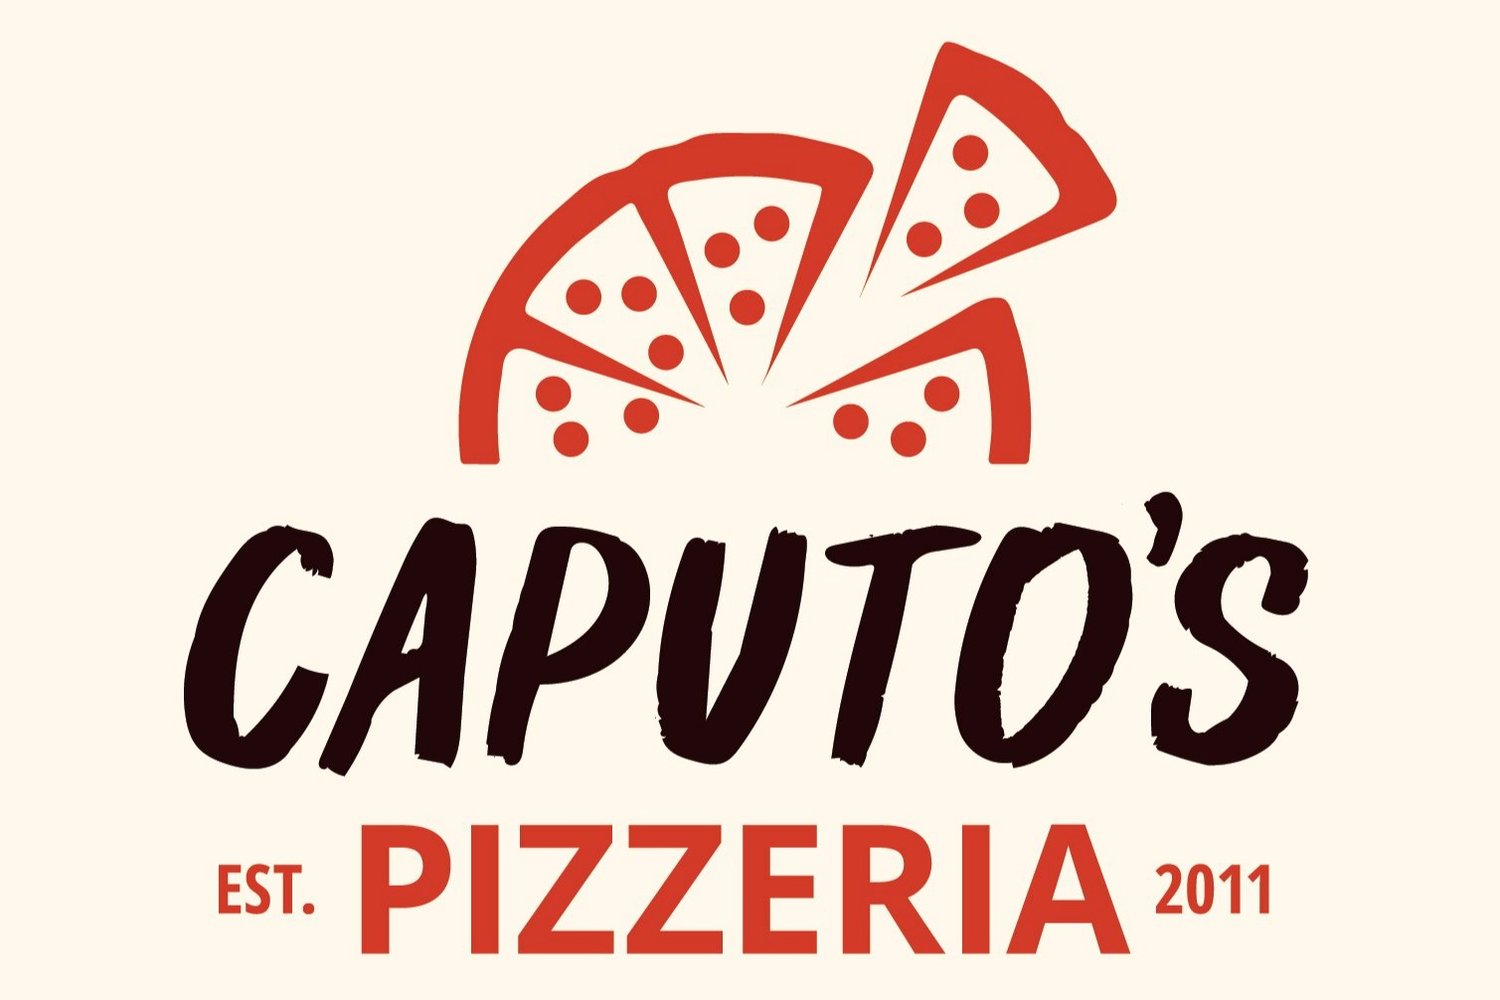 Caputo's Pizzeria